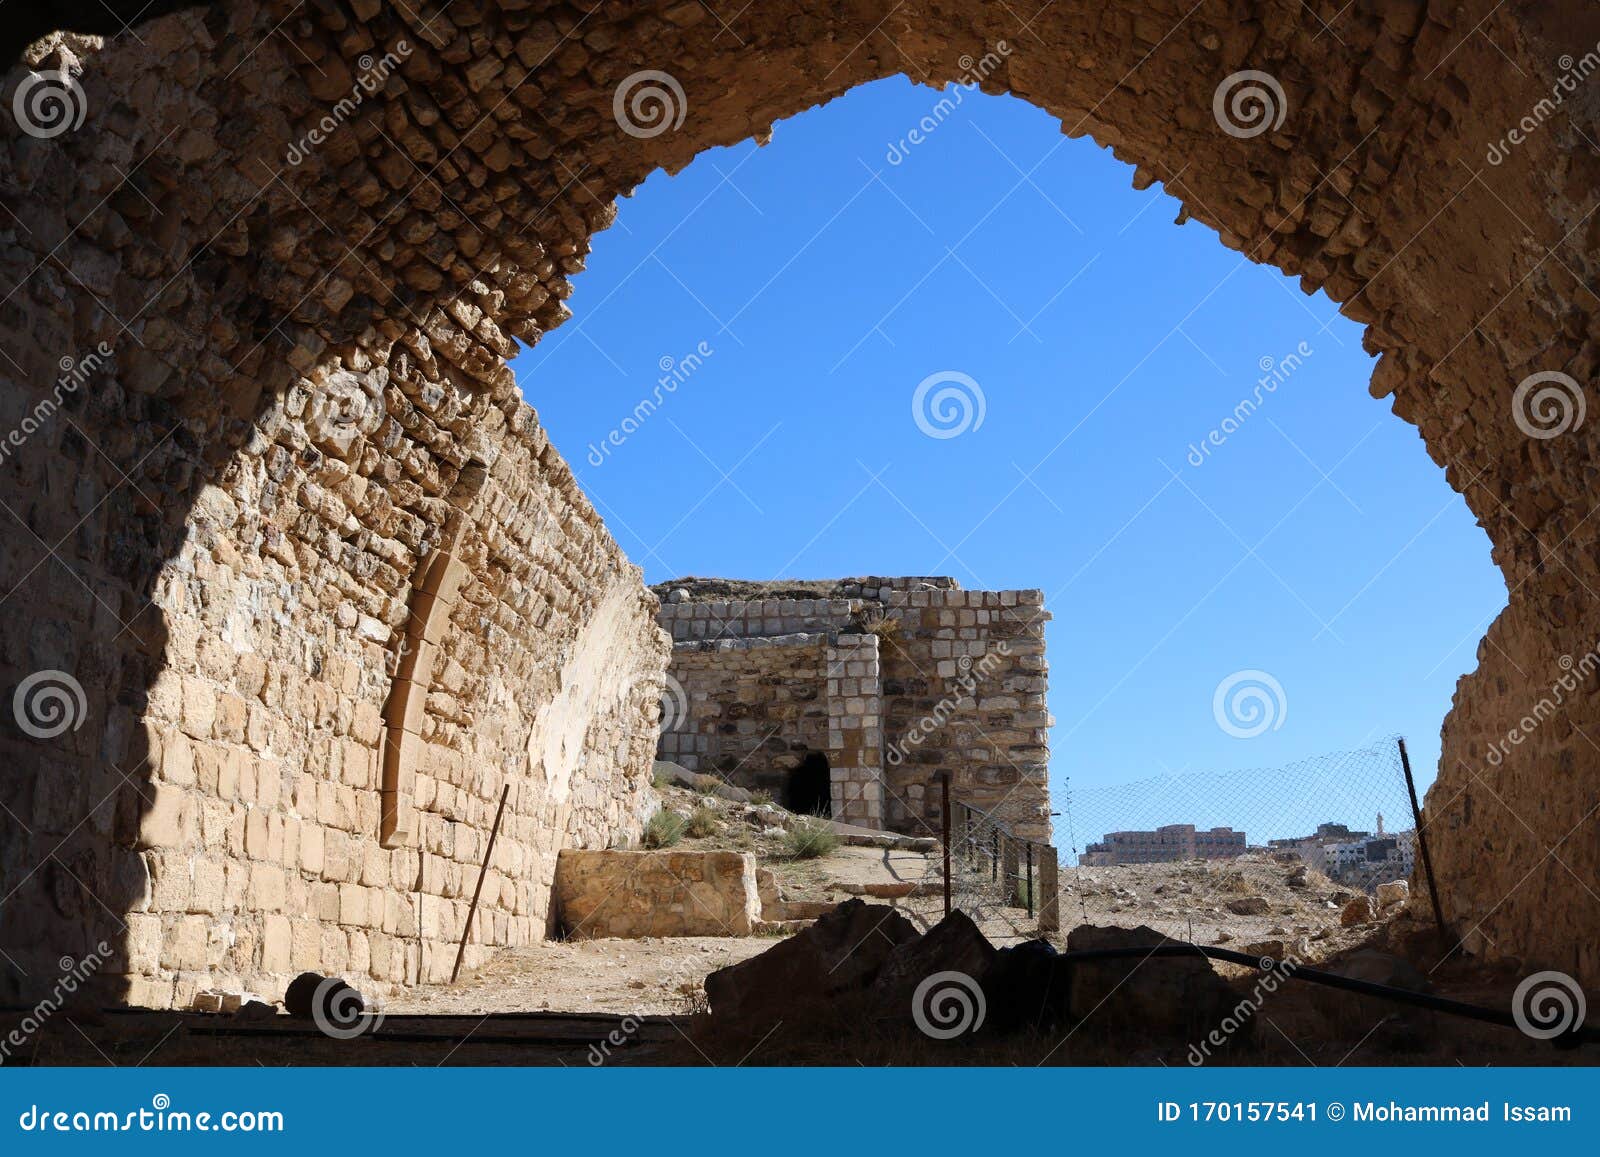 Al Karak Castle in the South of Jordan Stock Image Image of heritage, architectural: